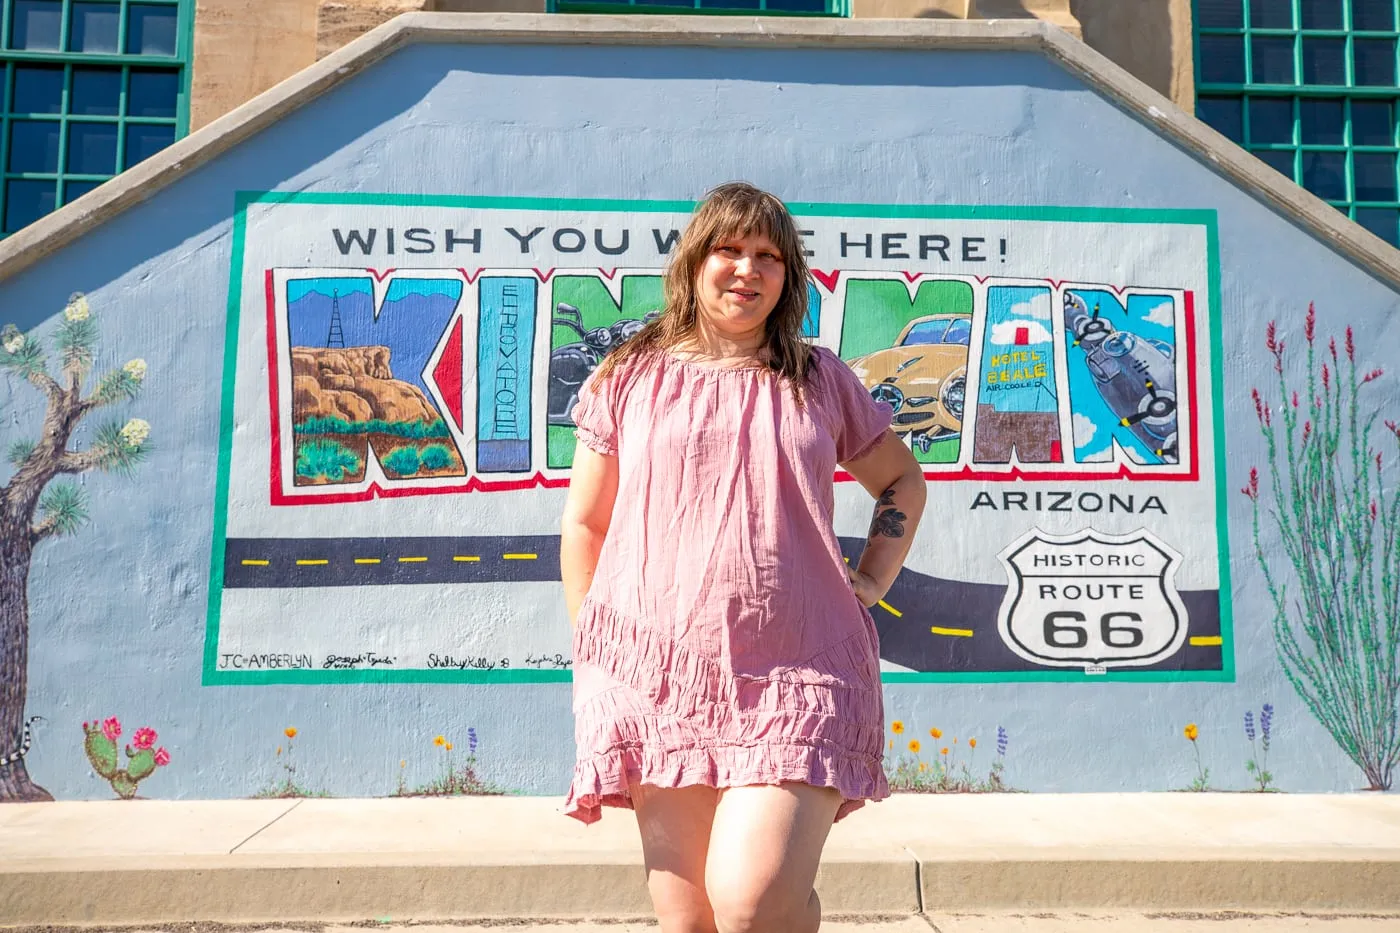 Wish You Were Here Mural in Kingman, Arizona (Route 66)